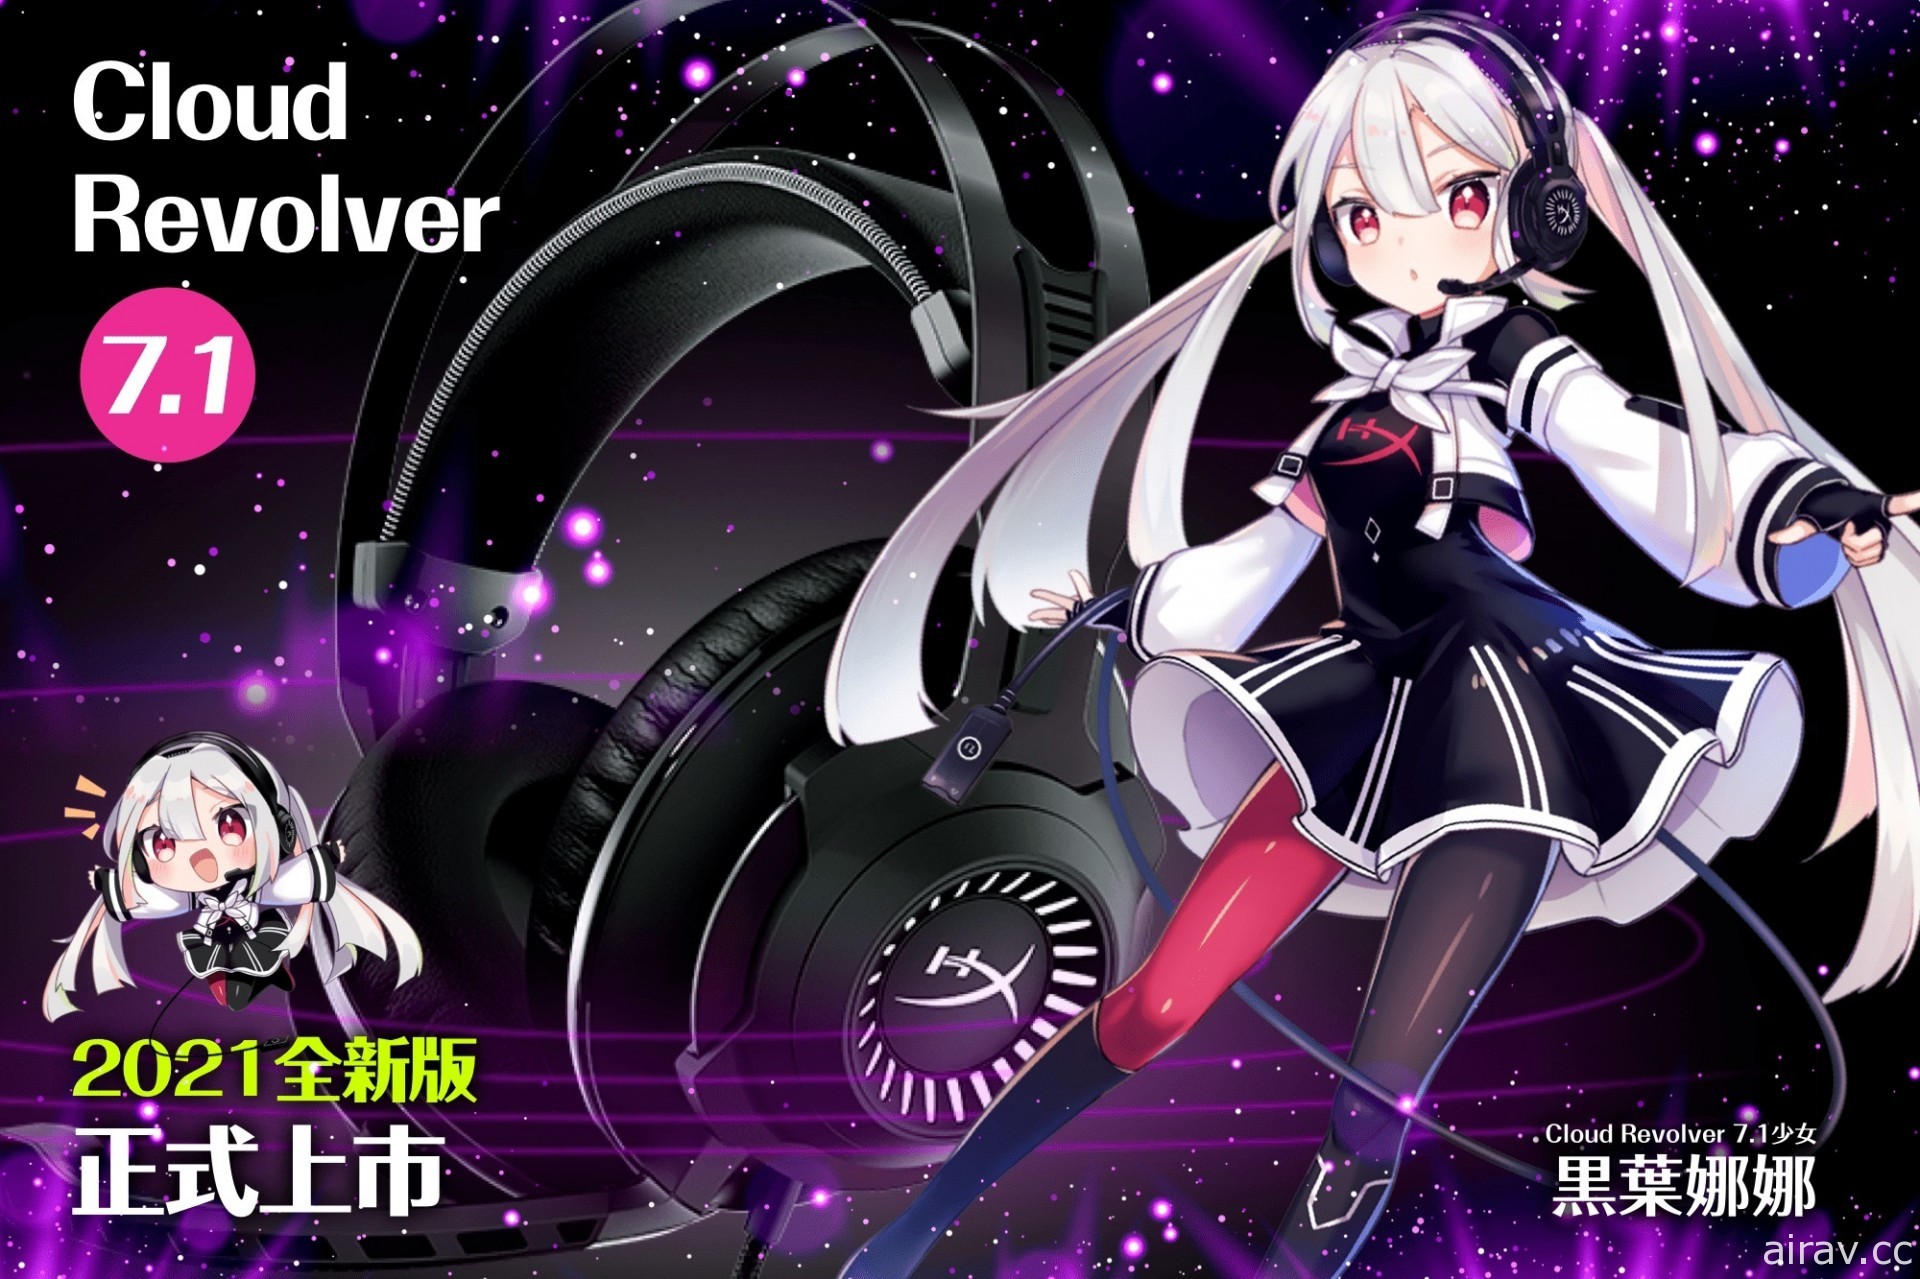 HyperX 改款 Cloud Revolver 7.1 電競耳機在台上市 打造擬人化耳機娘「黑葉娜娜」